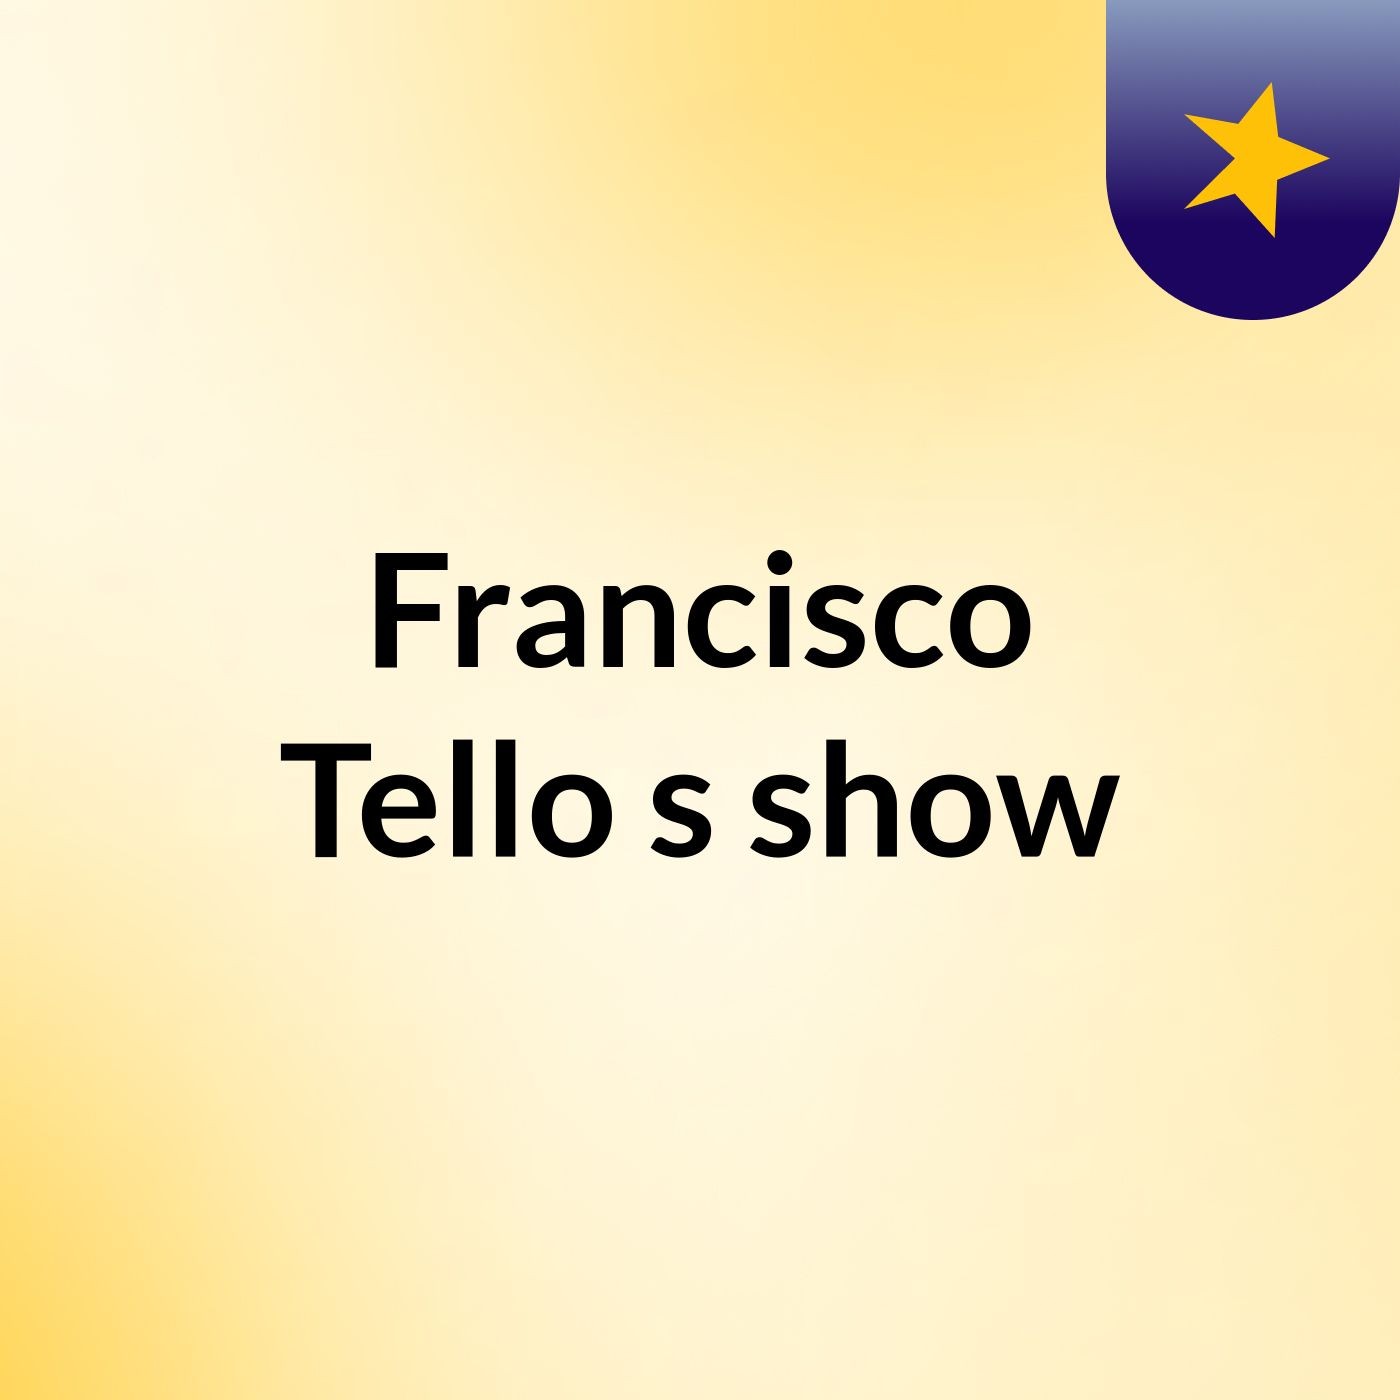 Francisco Tello's show